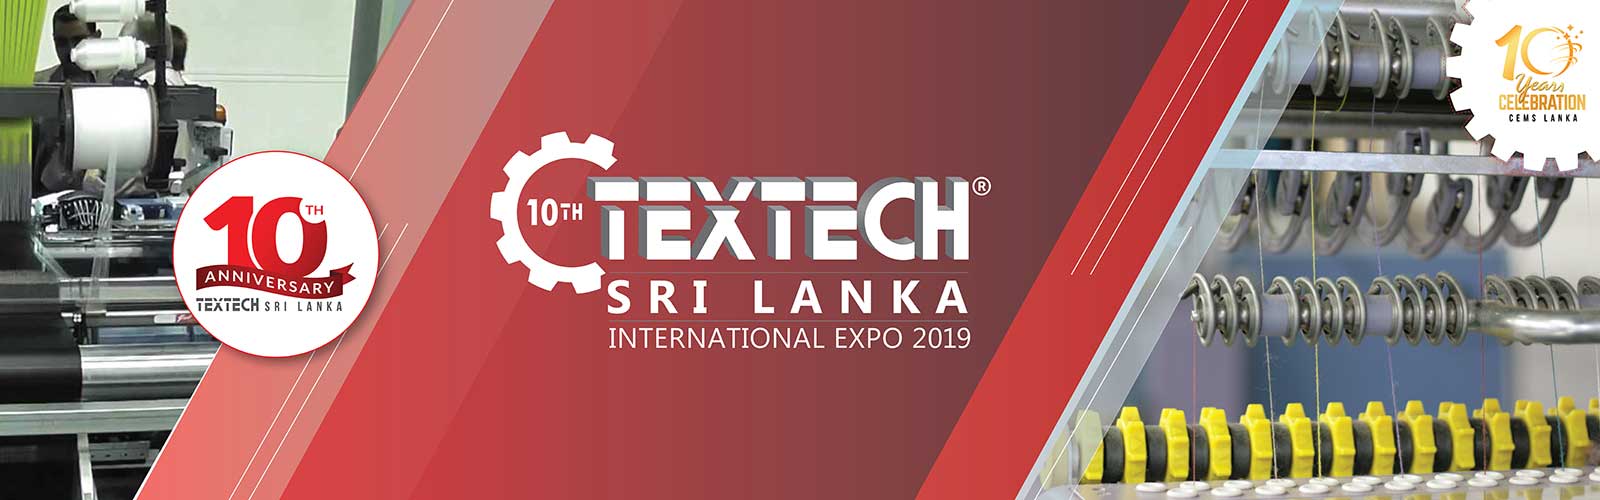  10th Textech Sri Lanka 2019 International Expo